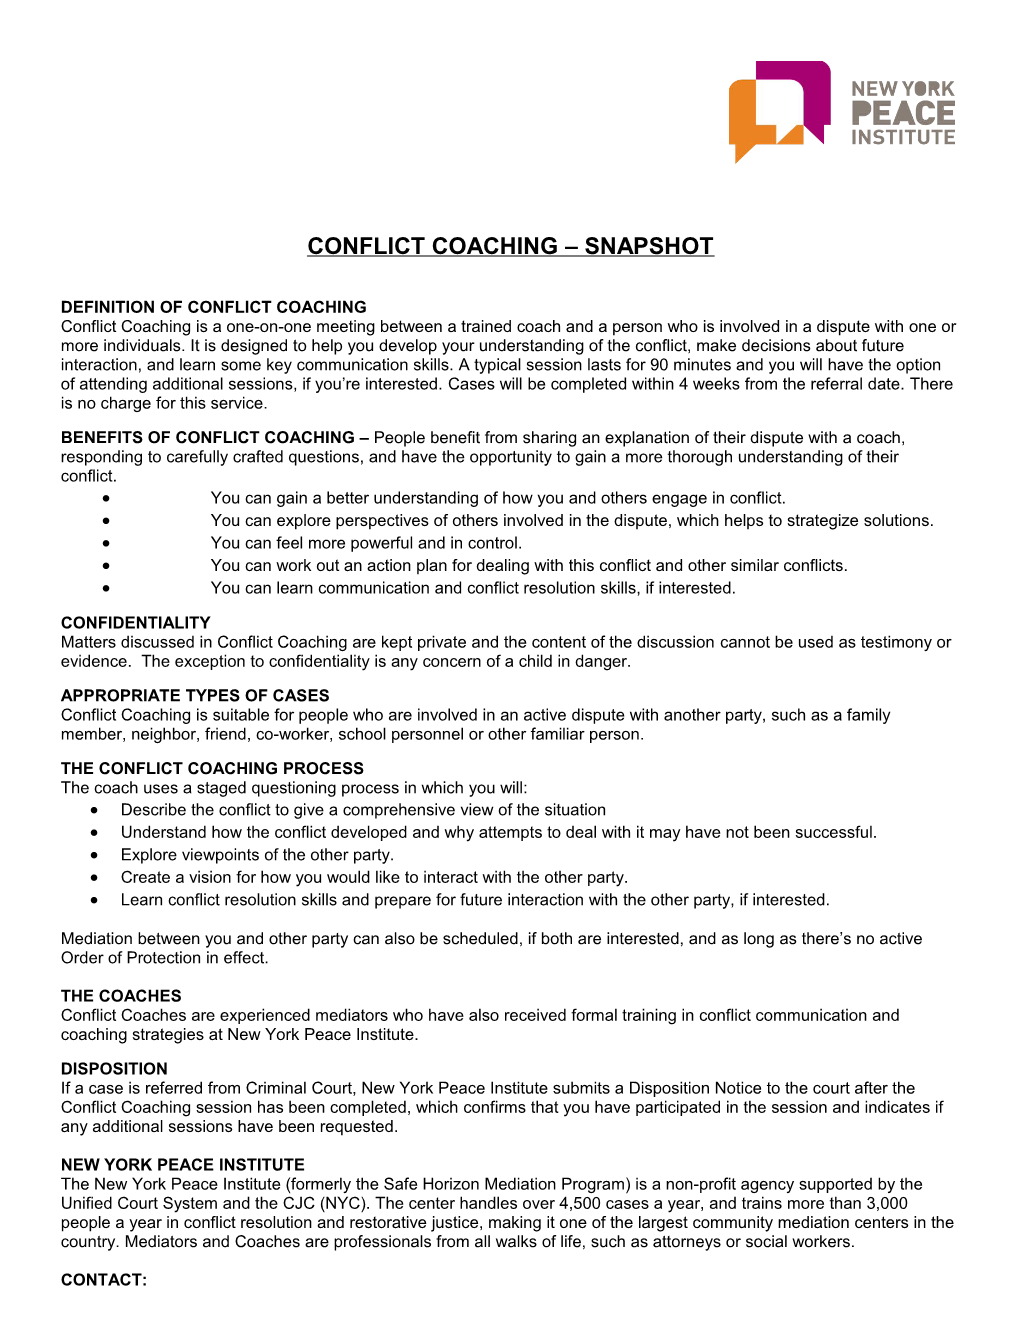 Conflict Coaching Snapshot